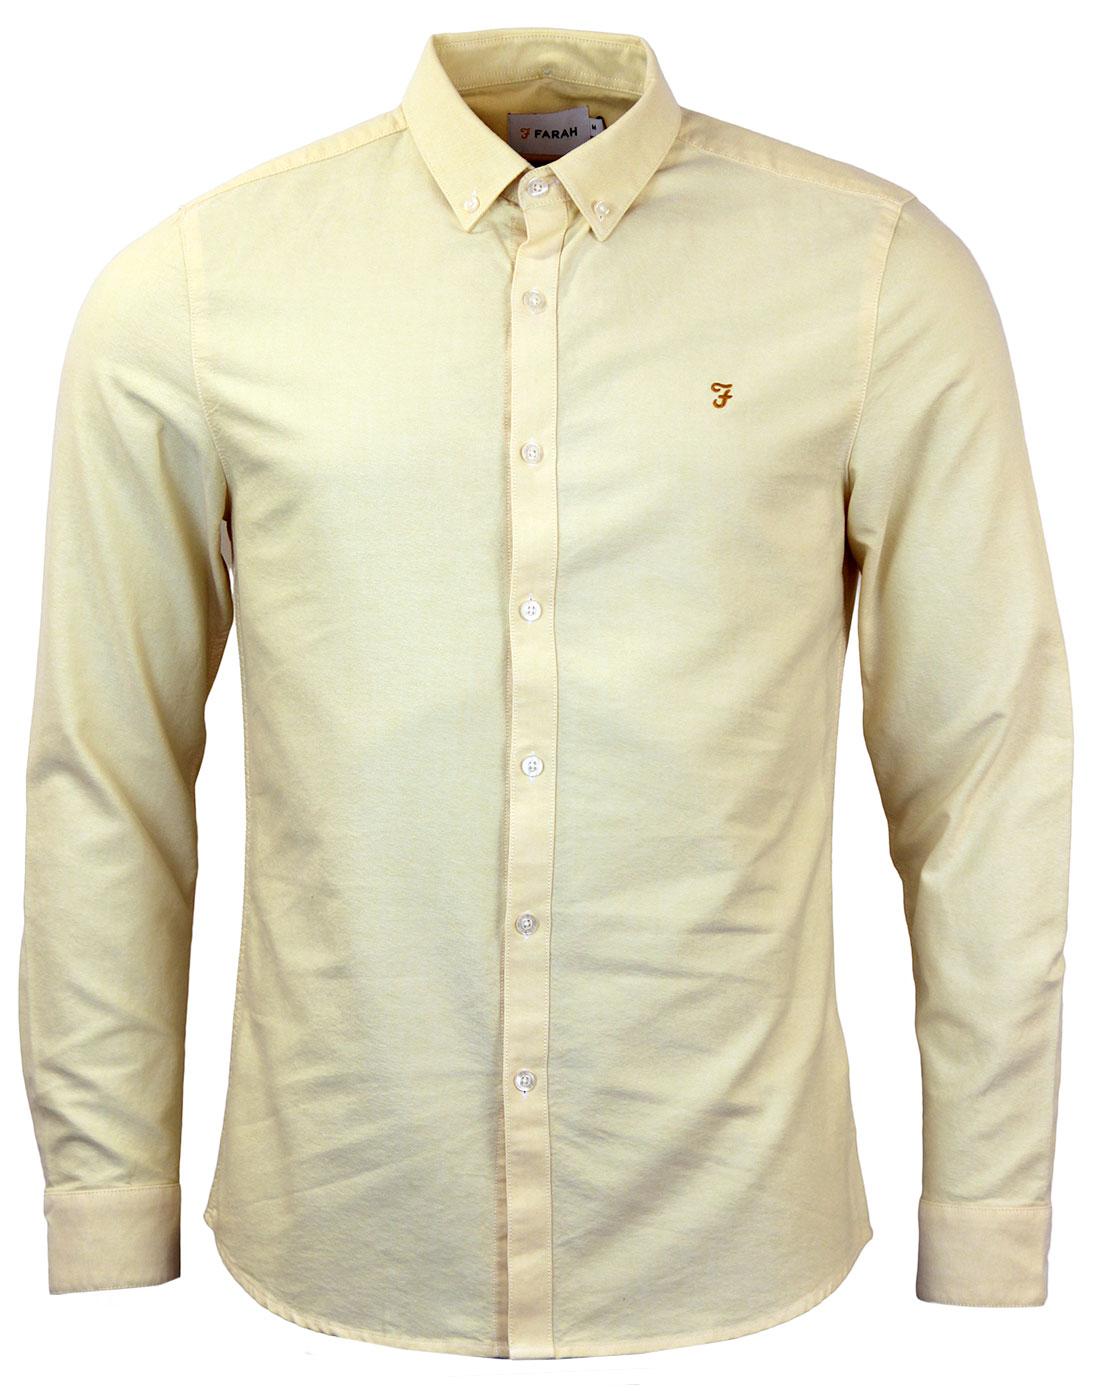 Brewer FARAH Retro Sixties Mod Oxford Shirt S